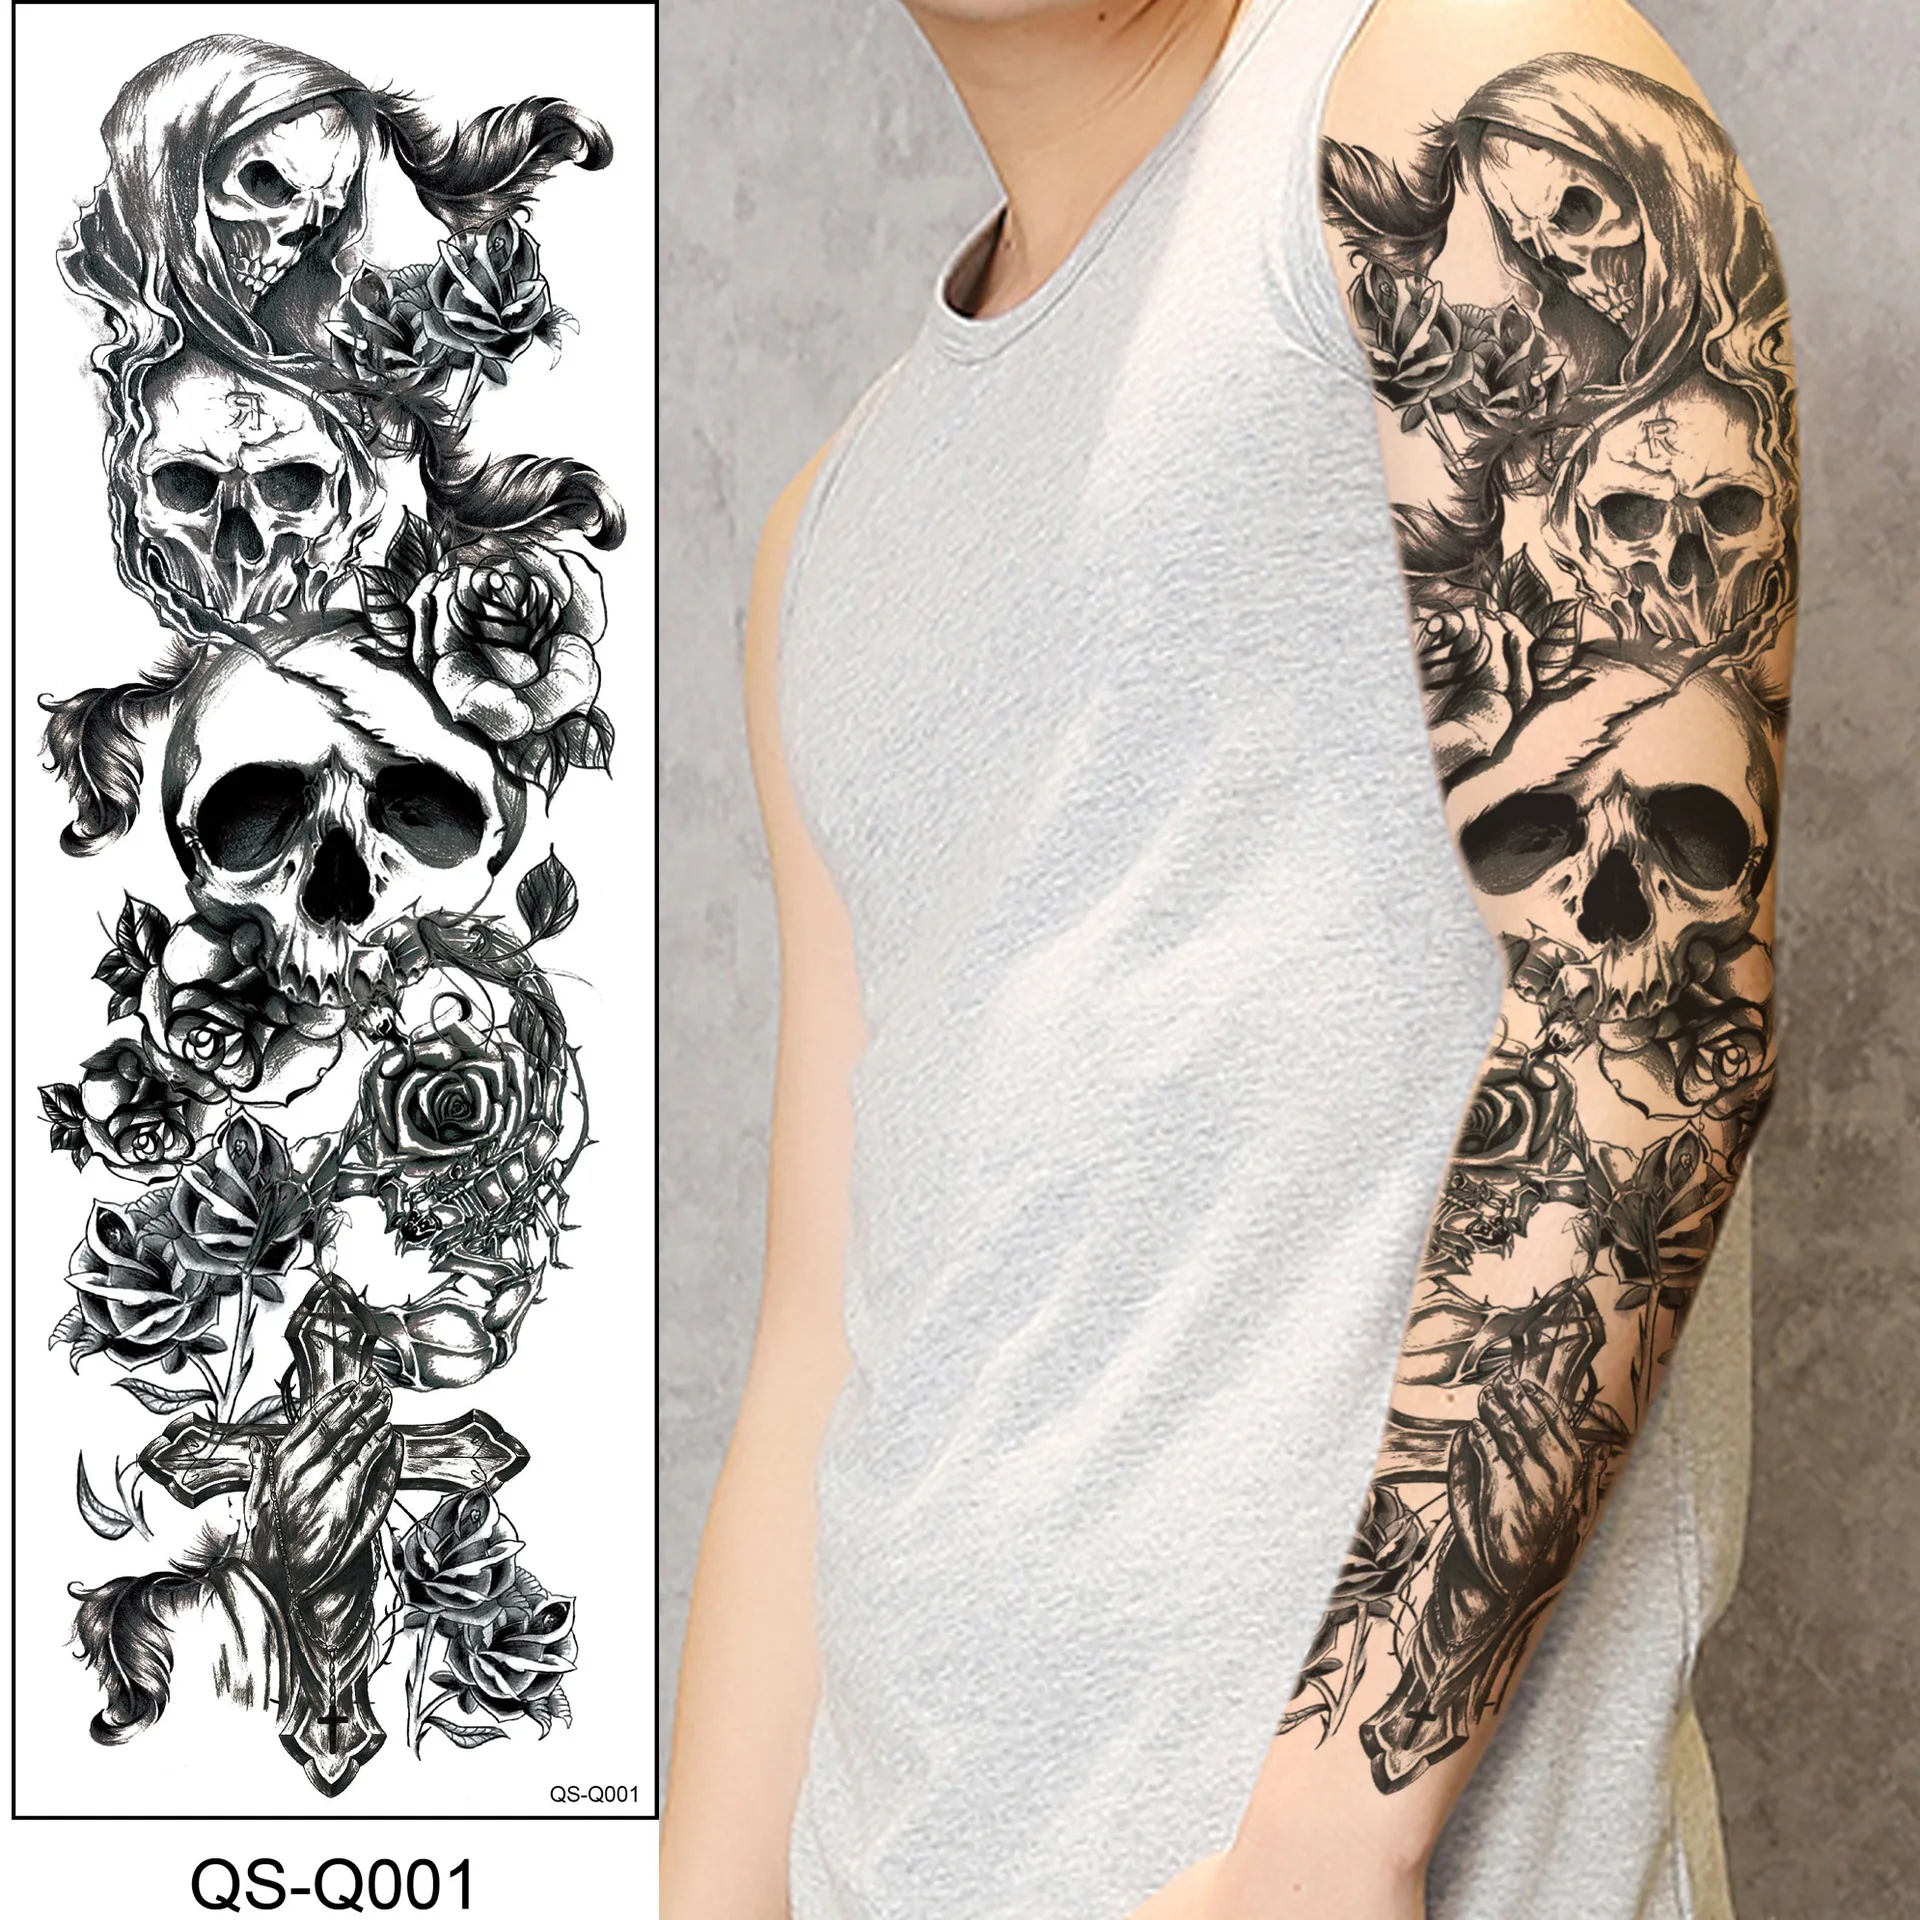 

Temporary Tattoos Skulls Flowers Large Patterns Full Arm Waterproof Sticker Decals Body Art Body Decorations Fake Tattoos